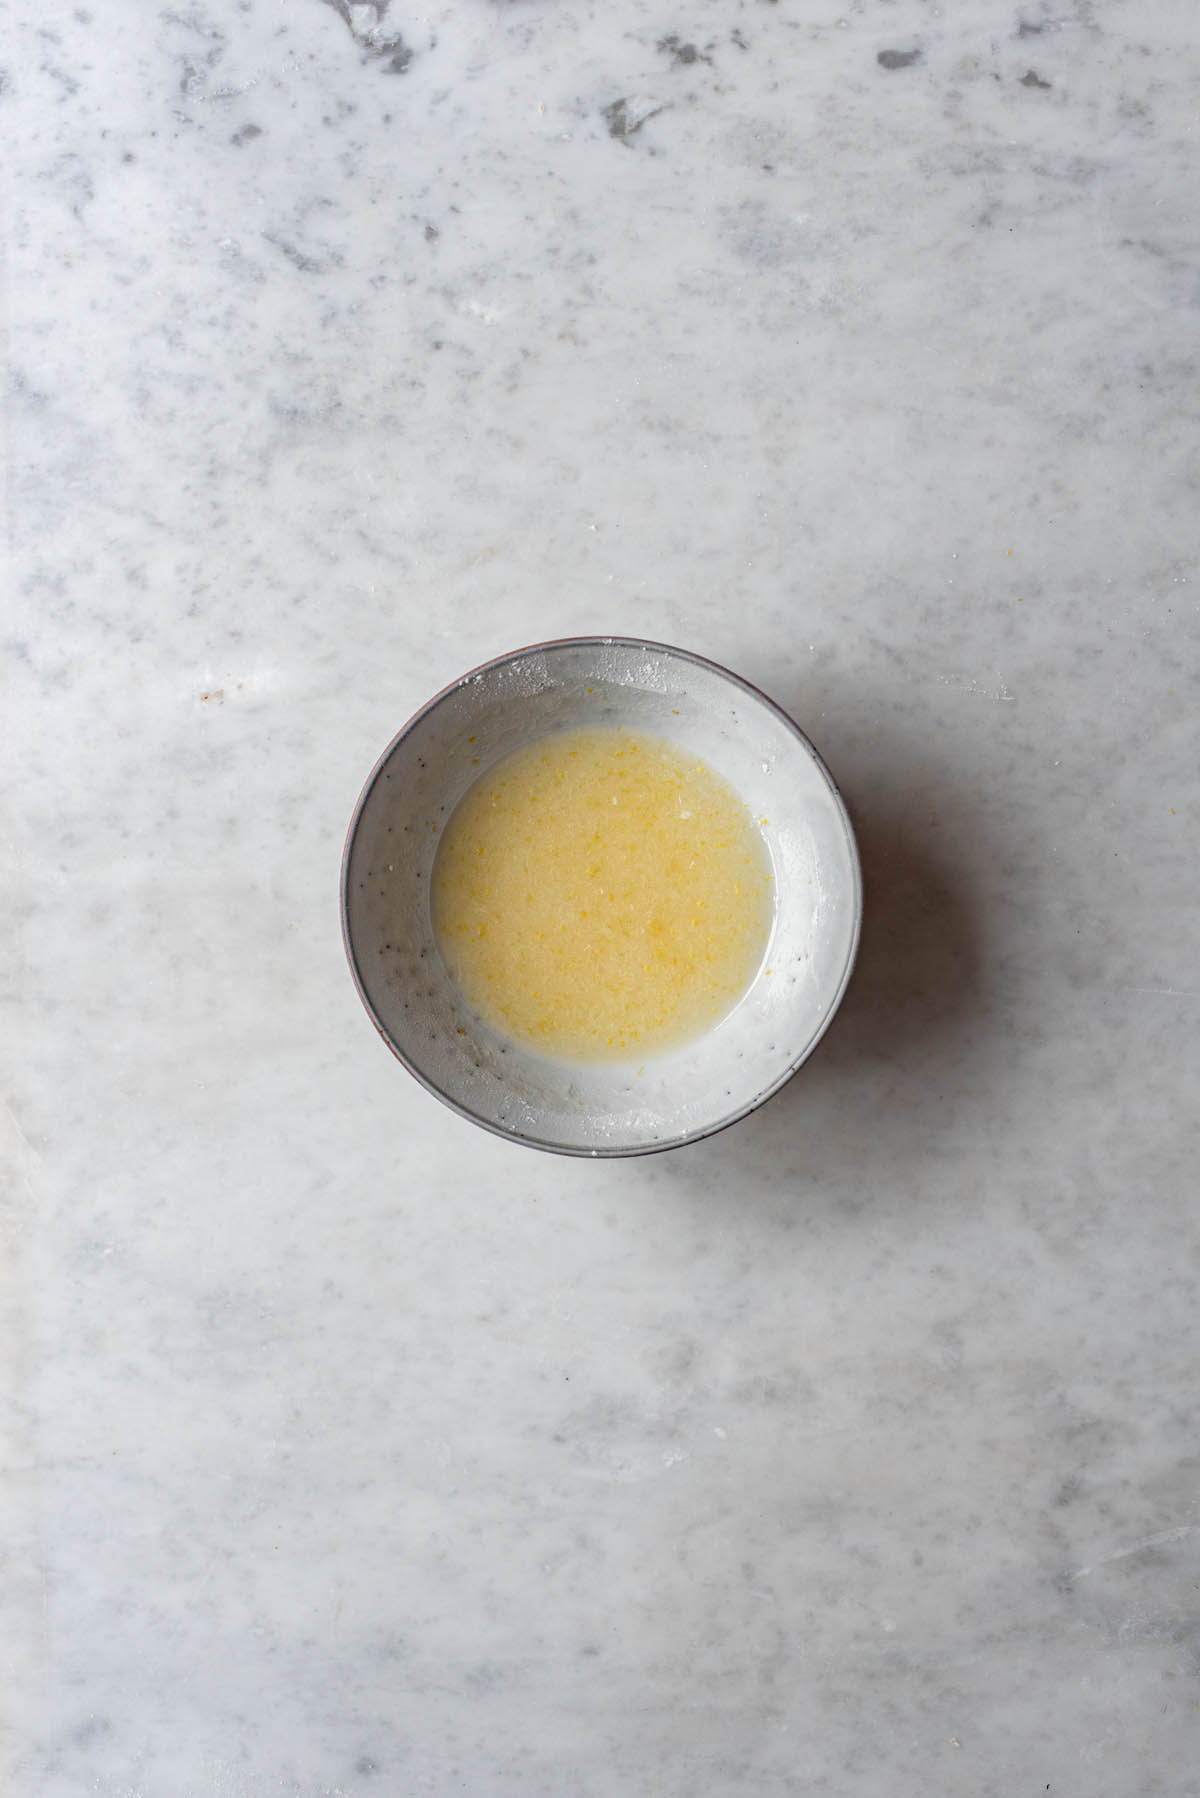 A small bowl of lemon juice.